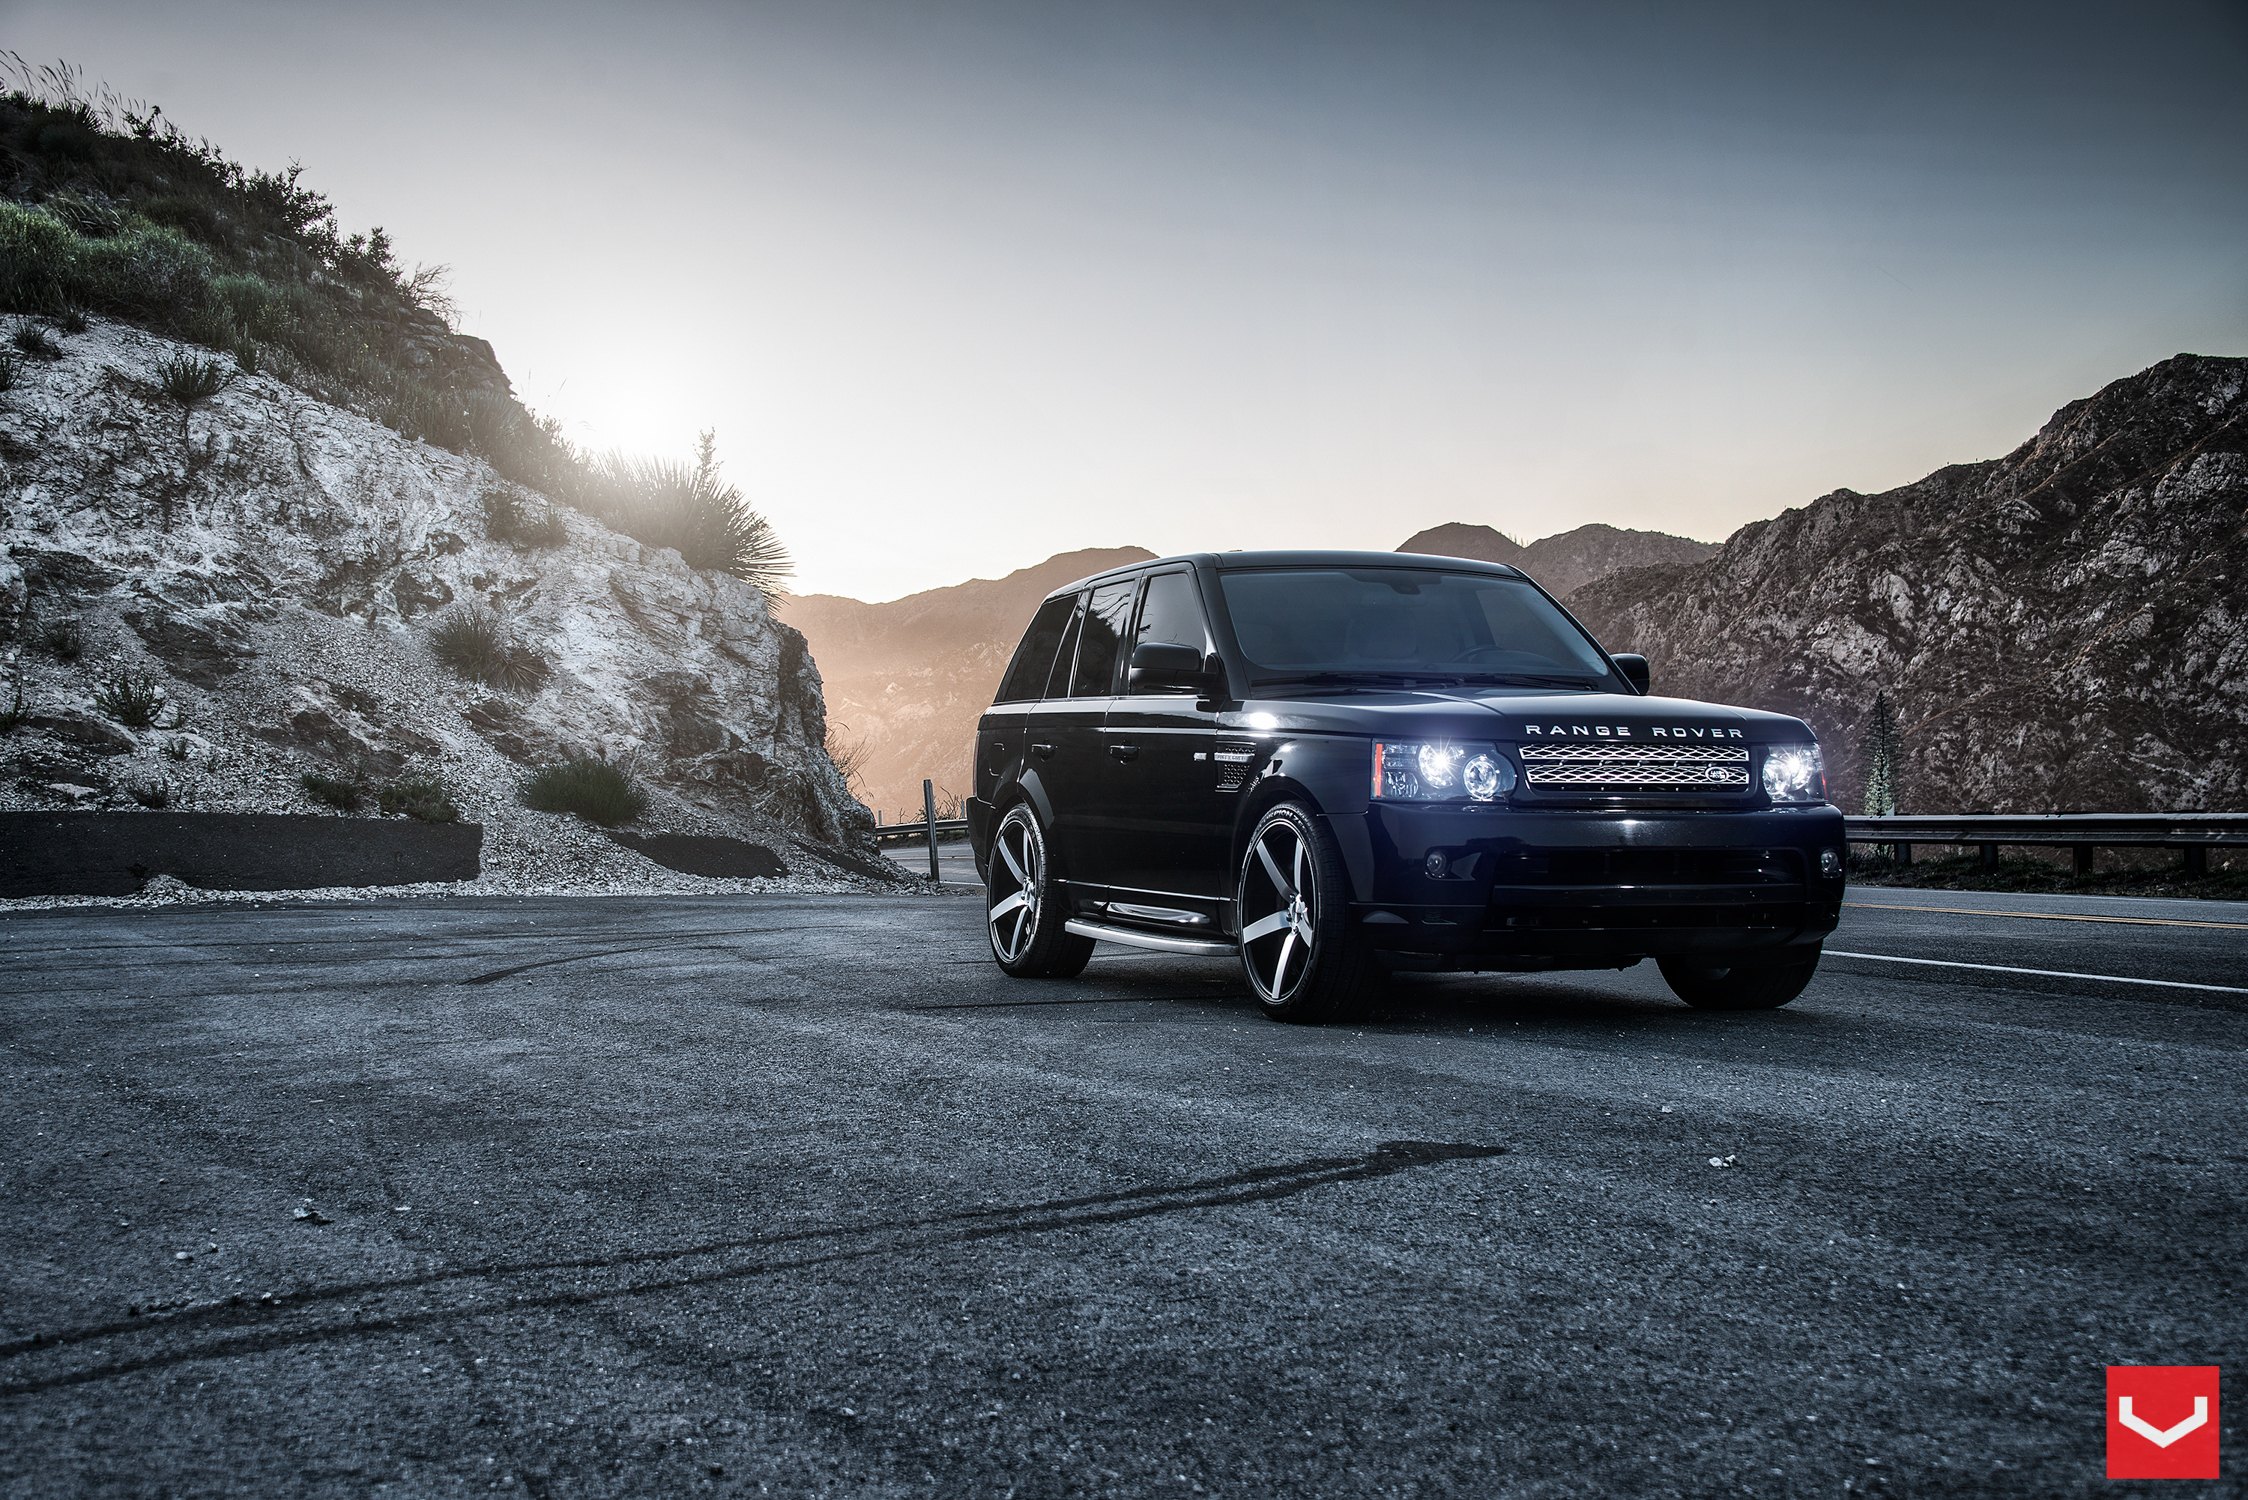 Custom Chrome Grille on Black Land Rover Sport - Photo by Vossen